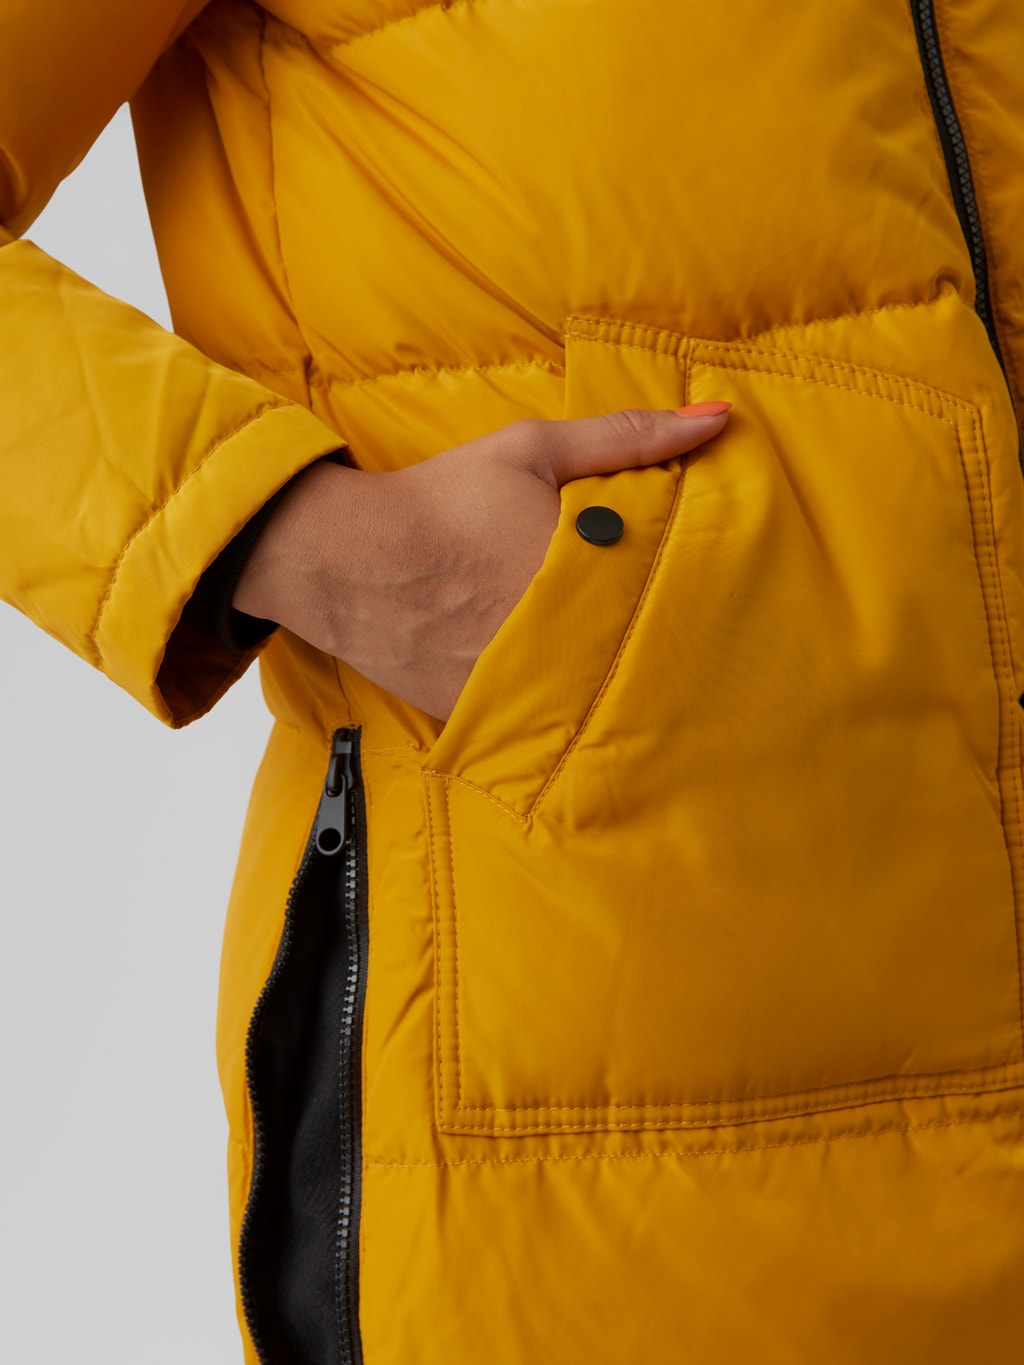 Hemmelighed afstemning Sodavand Hood Regular sleeves Jacket | Medium Orange | Vero Moda®